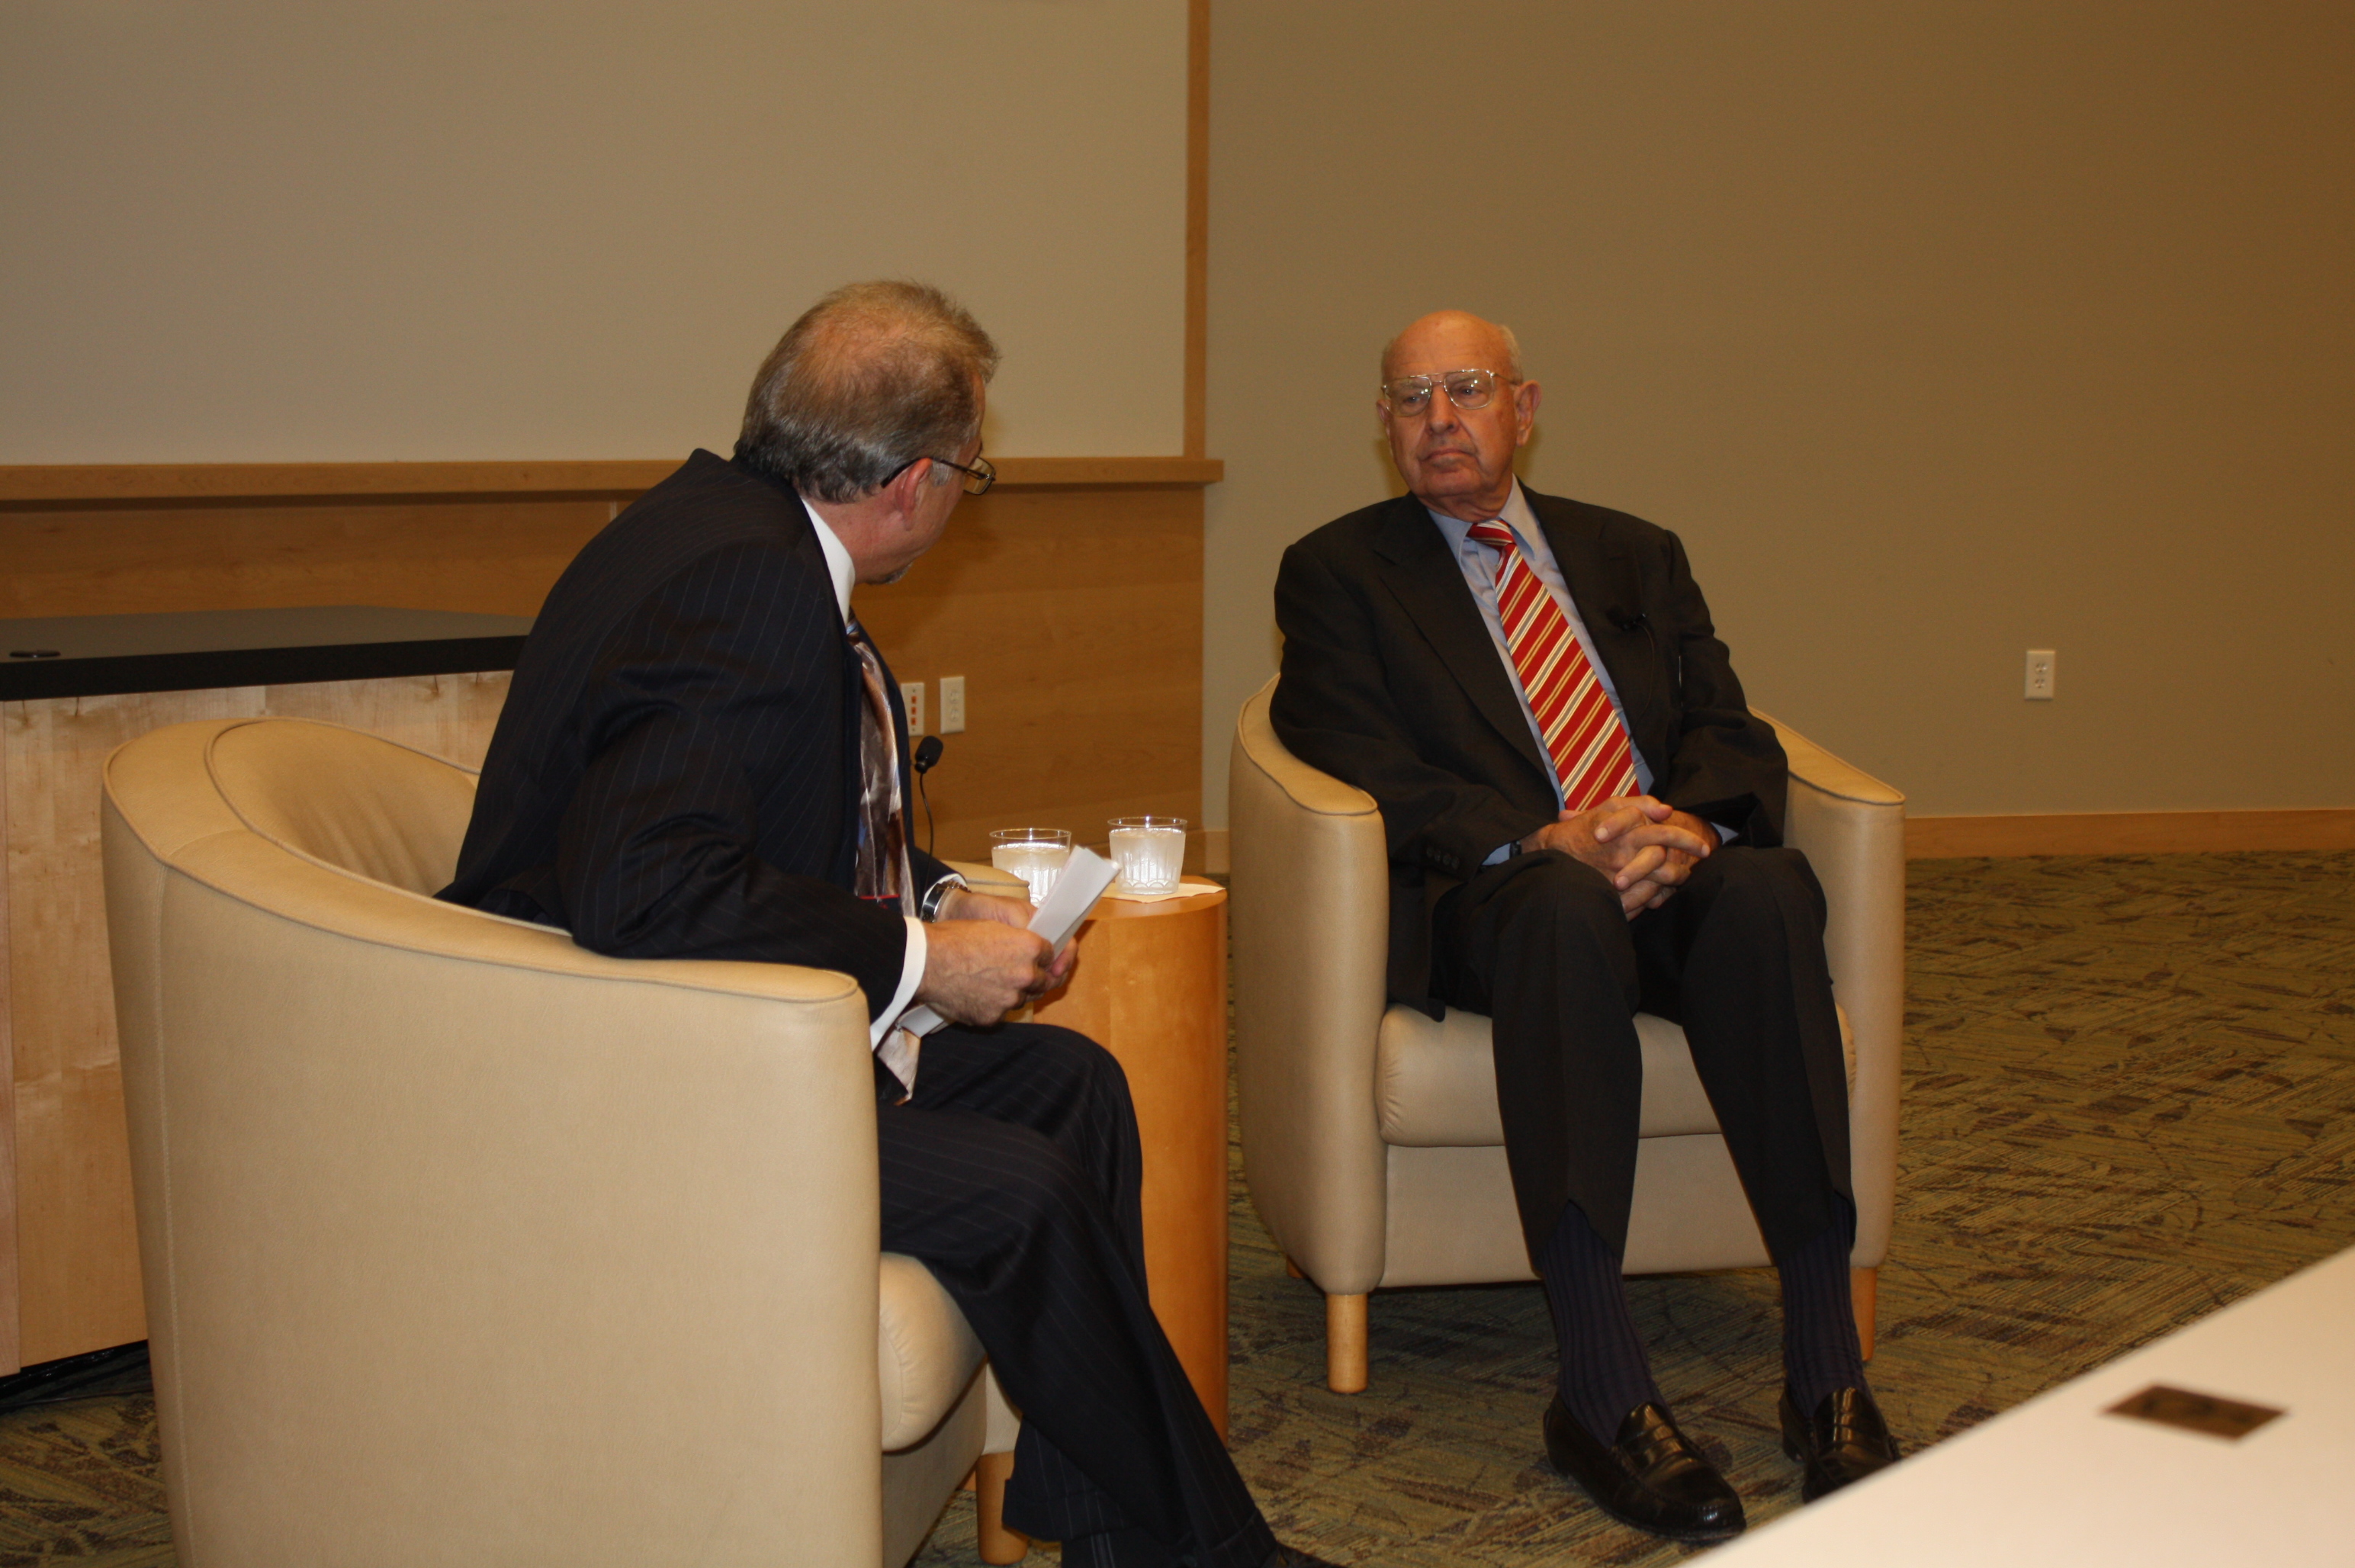 Dr. Milani's conversation with Ambassador Pickering 